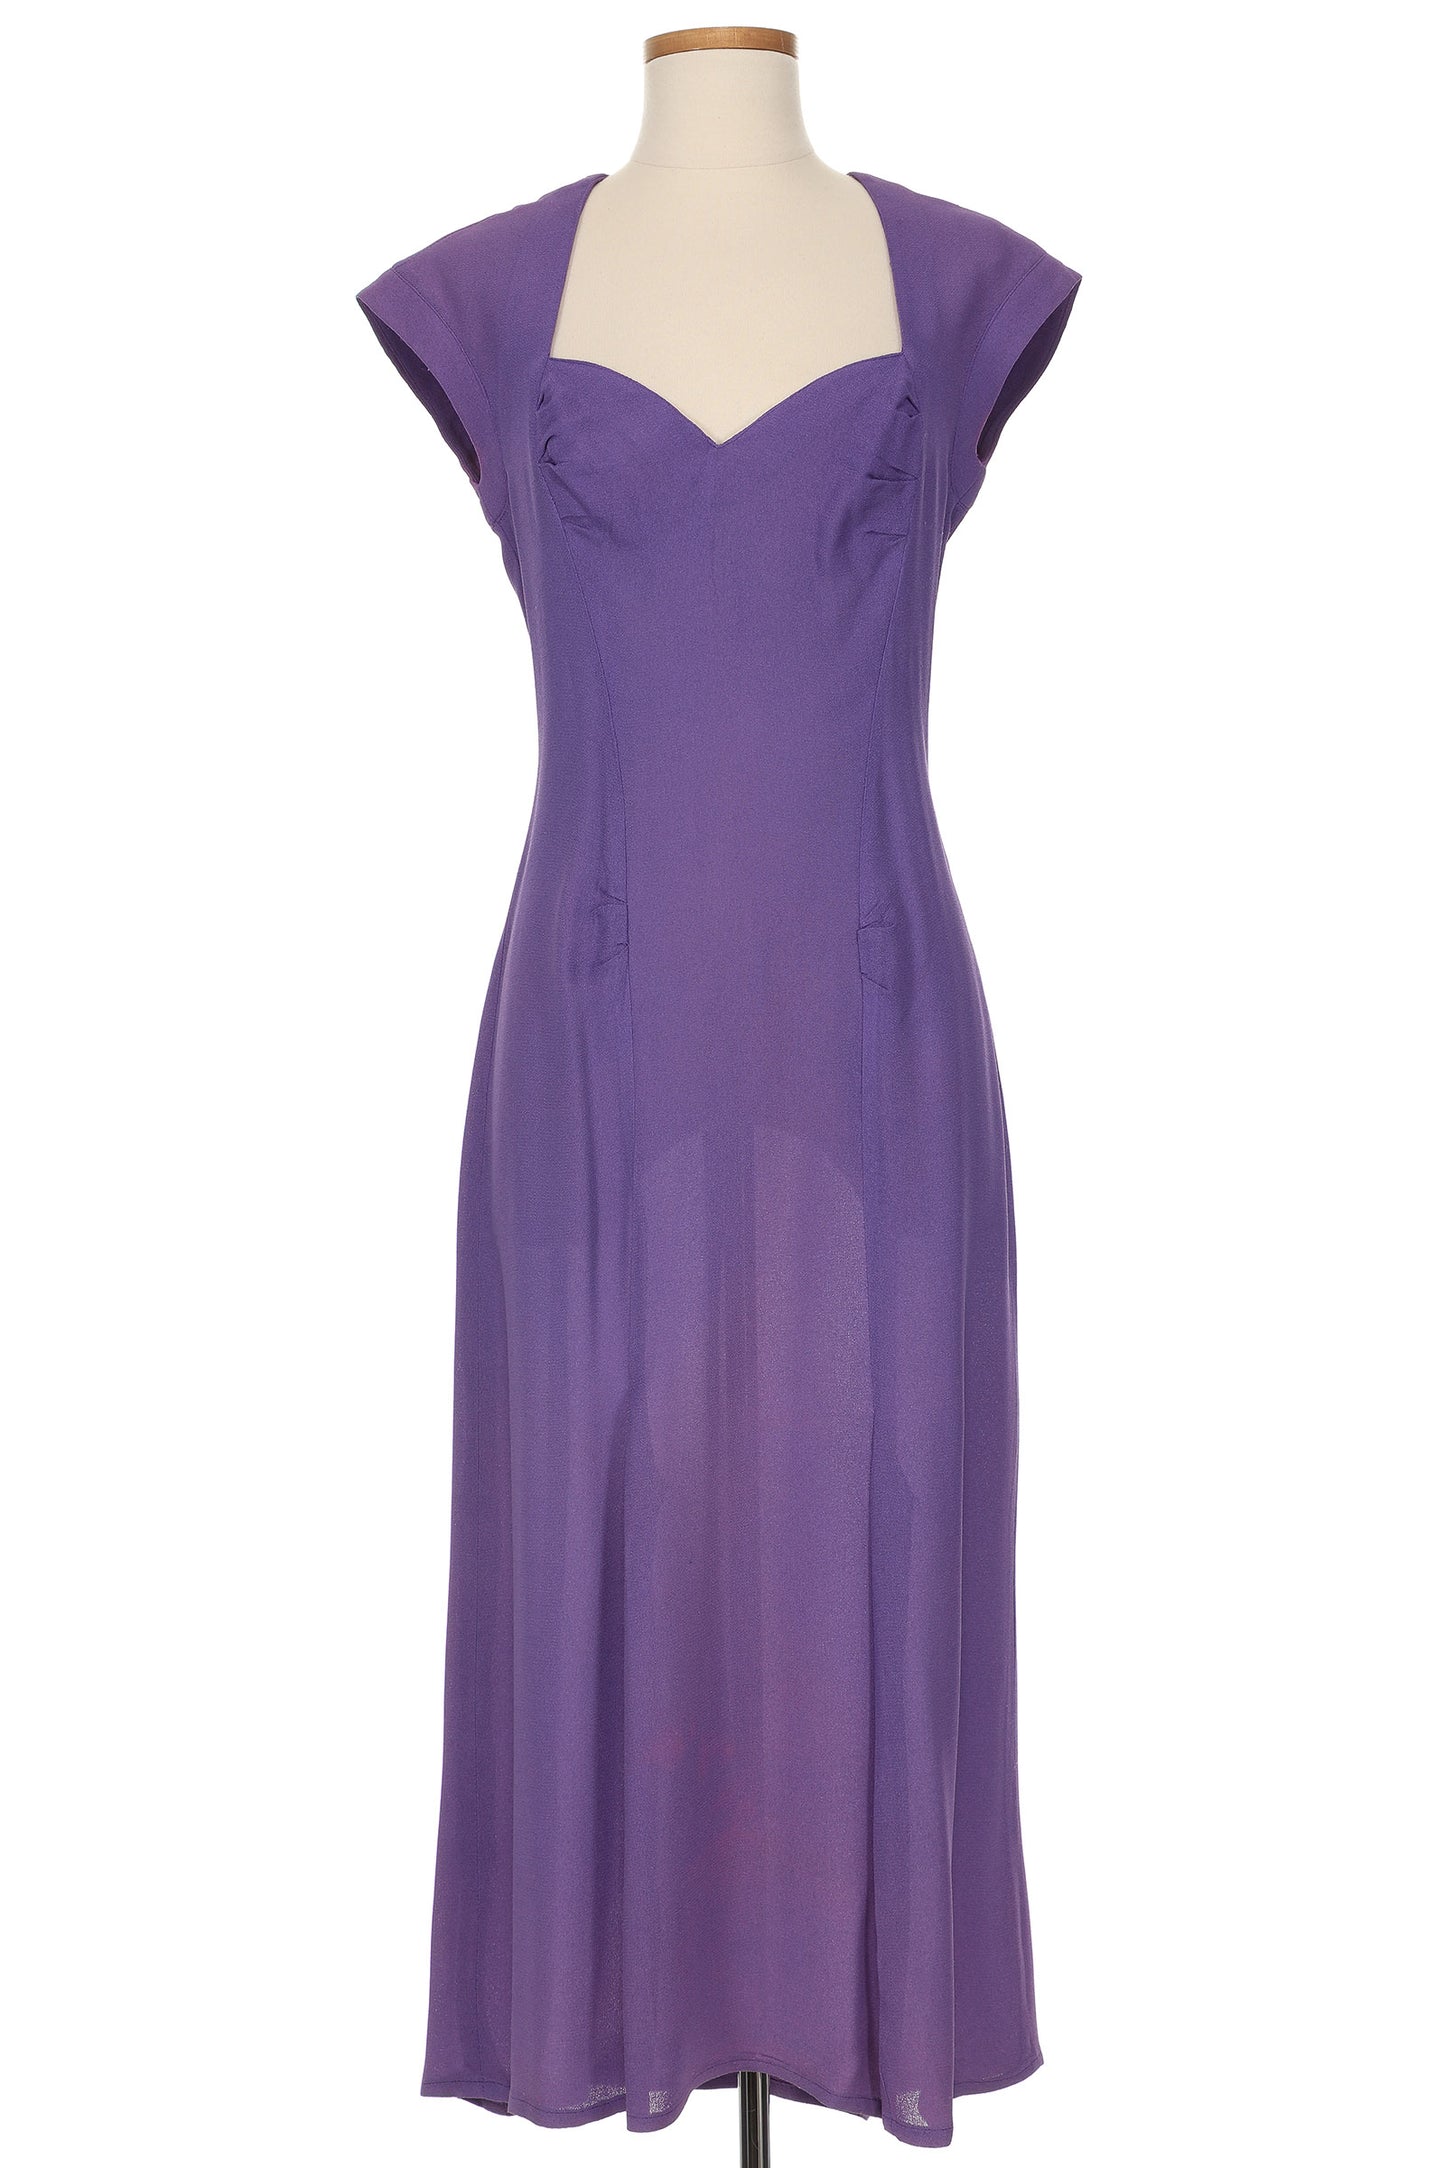 Ossie Clark for Radley 1970's Purple Dress